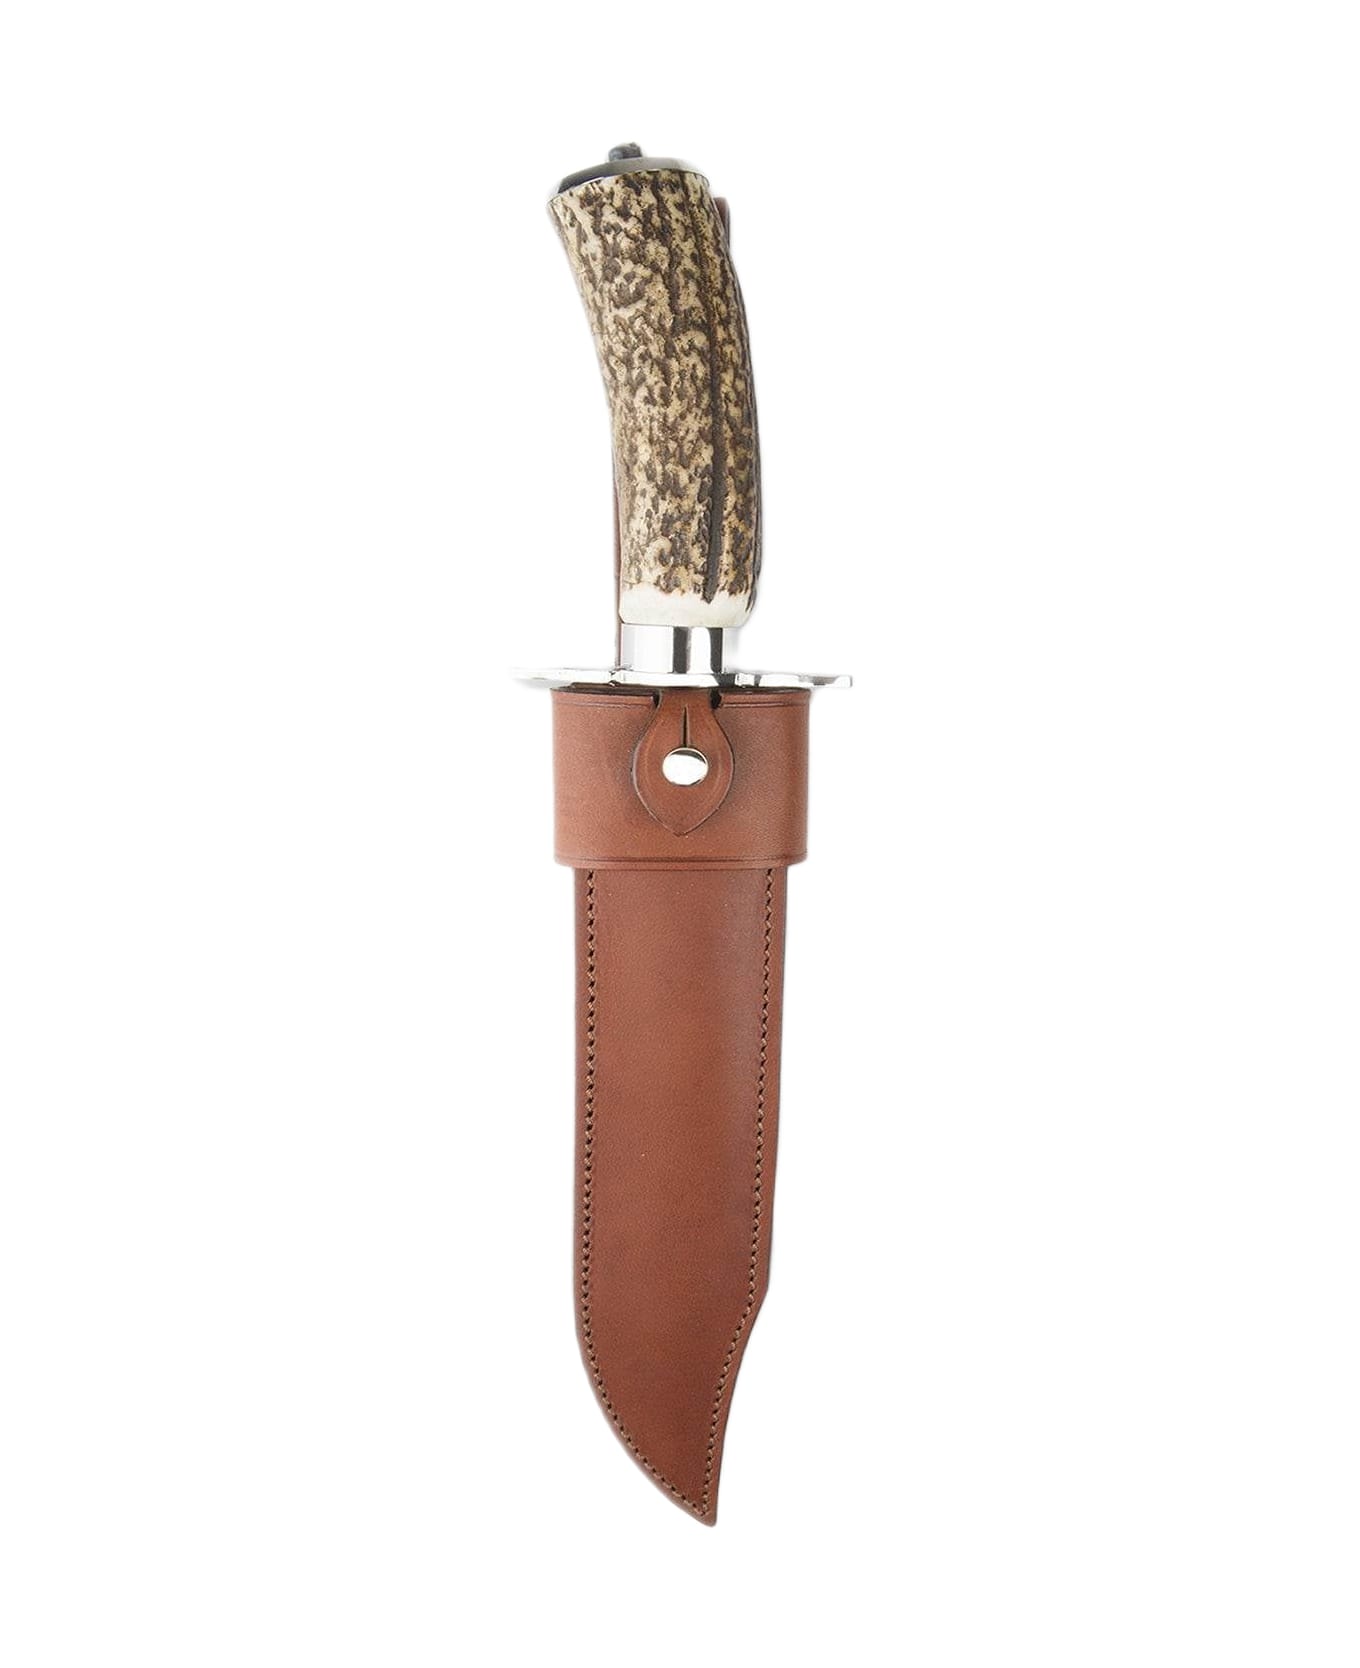 Larusmiani Hunting Dagger With Deer Antler Handle  - Neutral